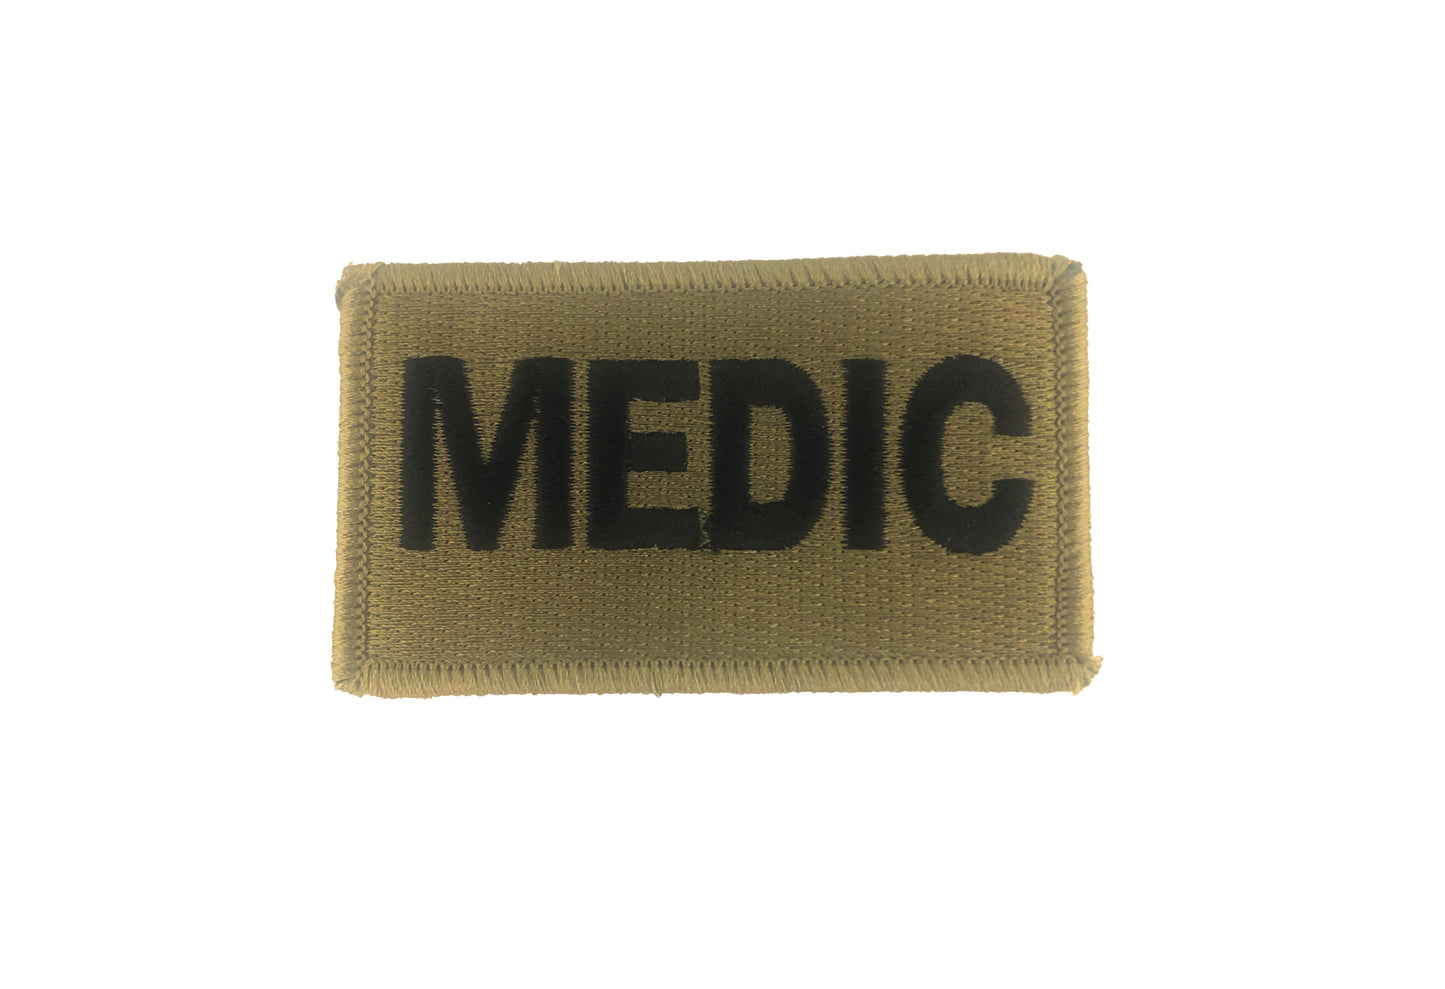 MEDIC Brassard - OCP Patch with Hook Fastener (EA)